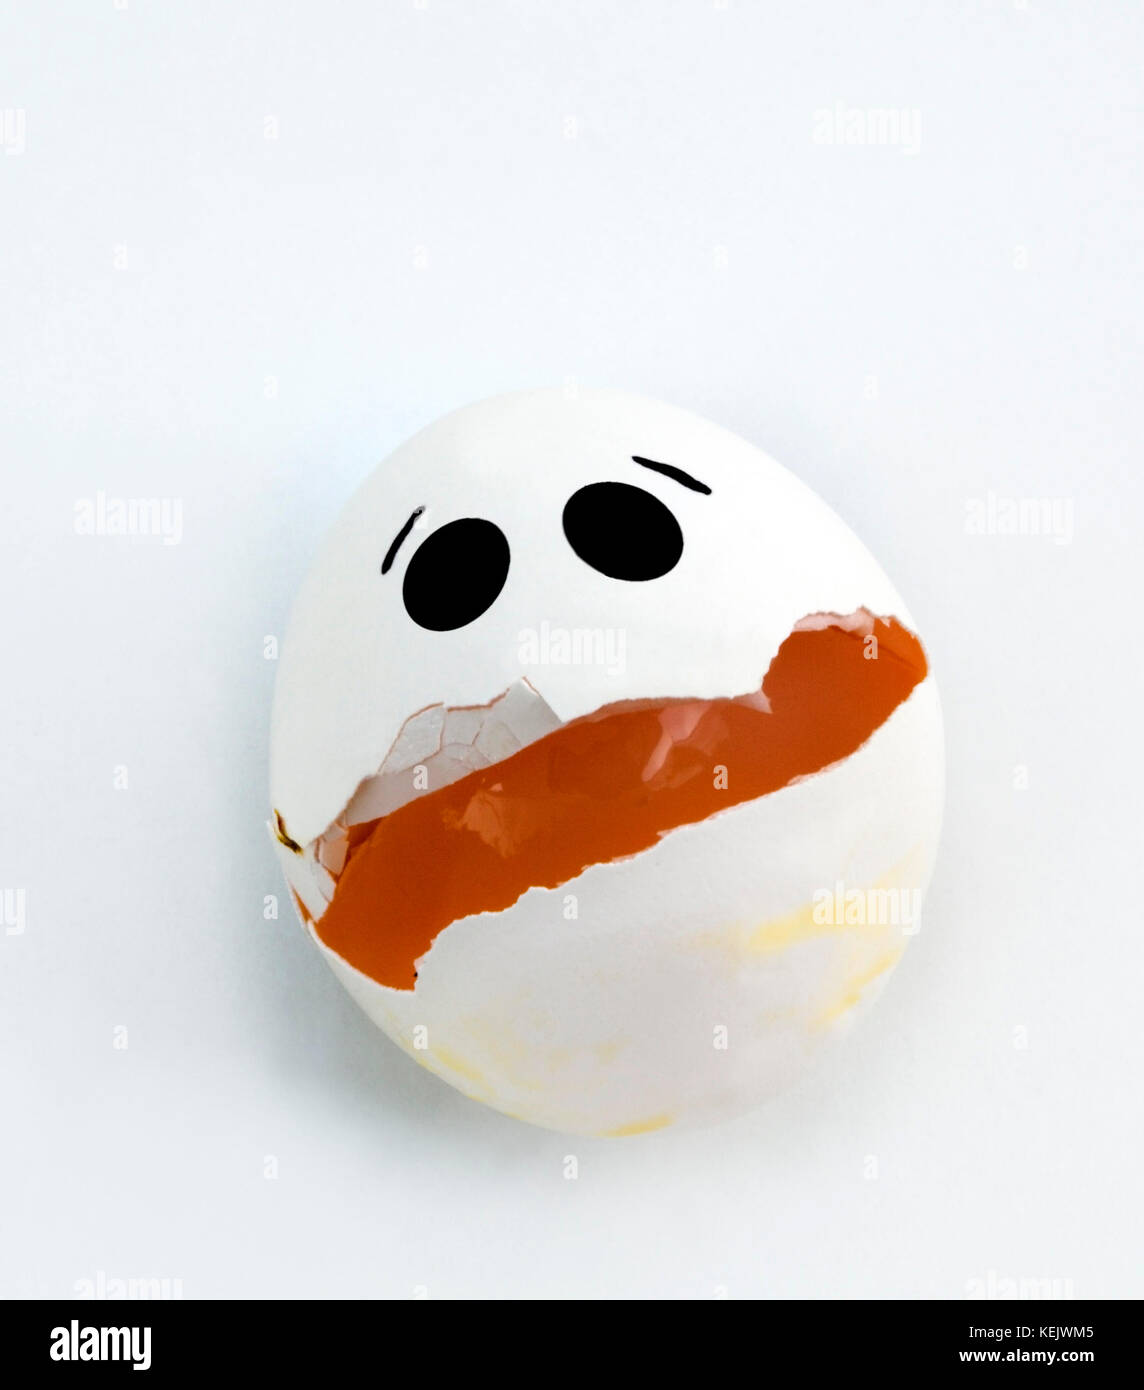 Cracked egg with sad expression. Stock Photo